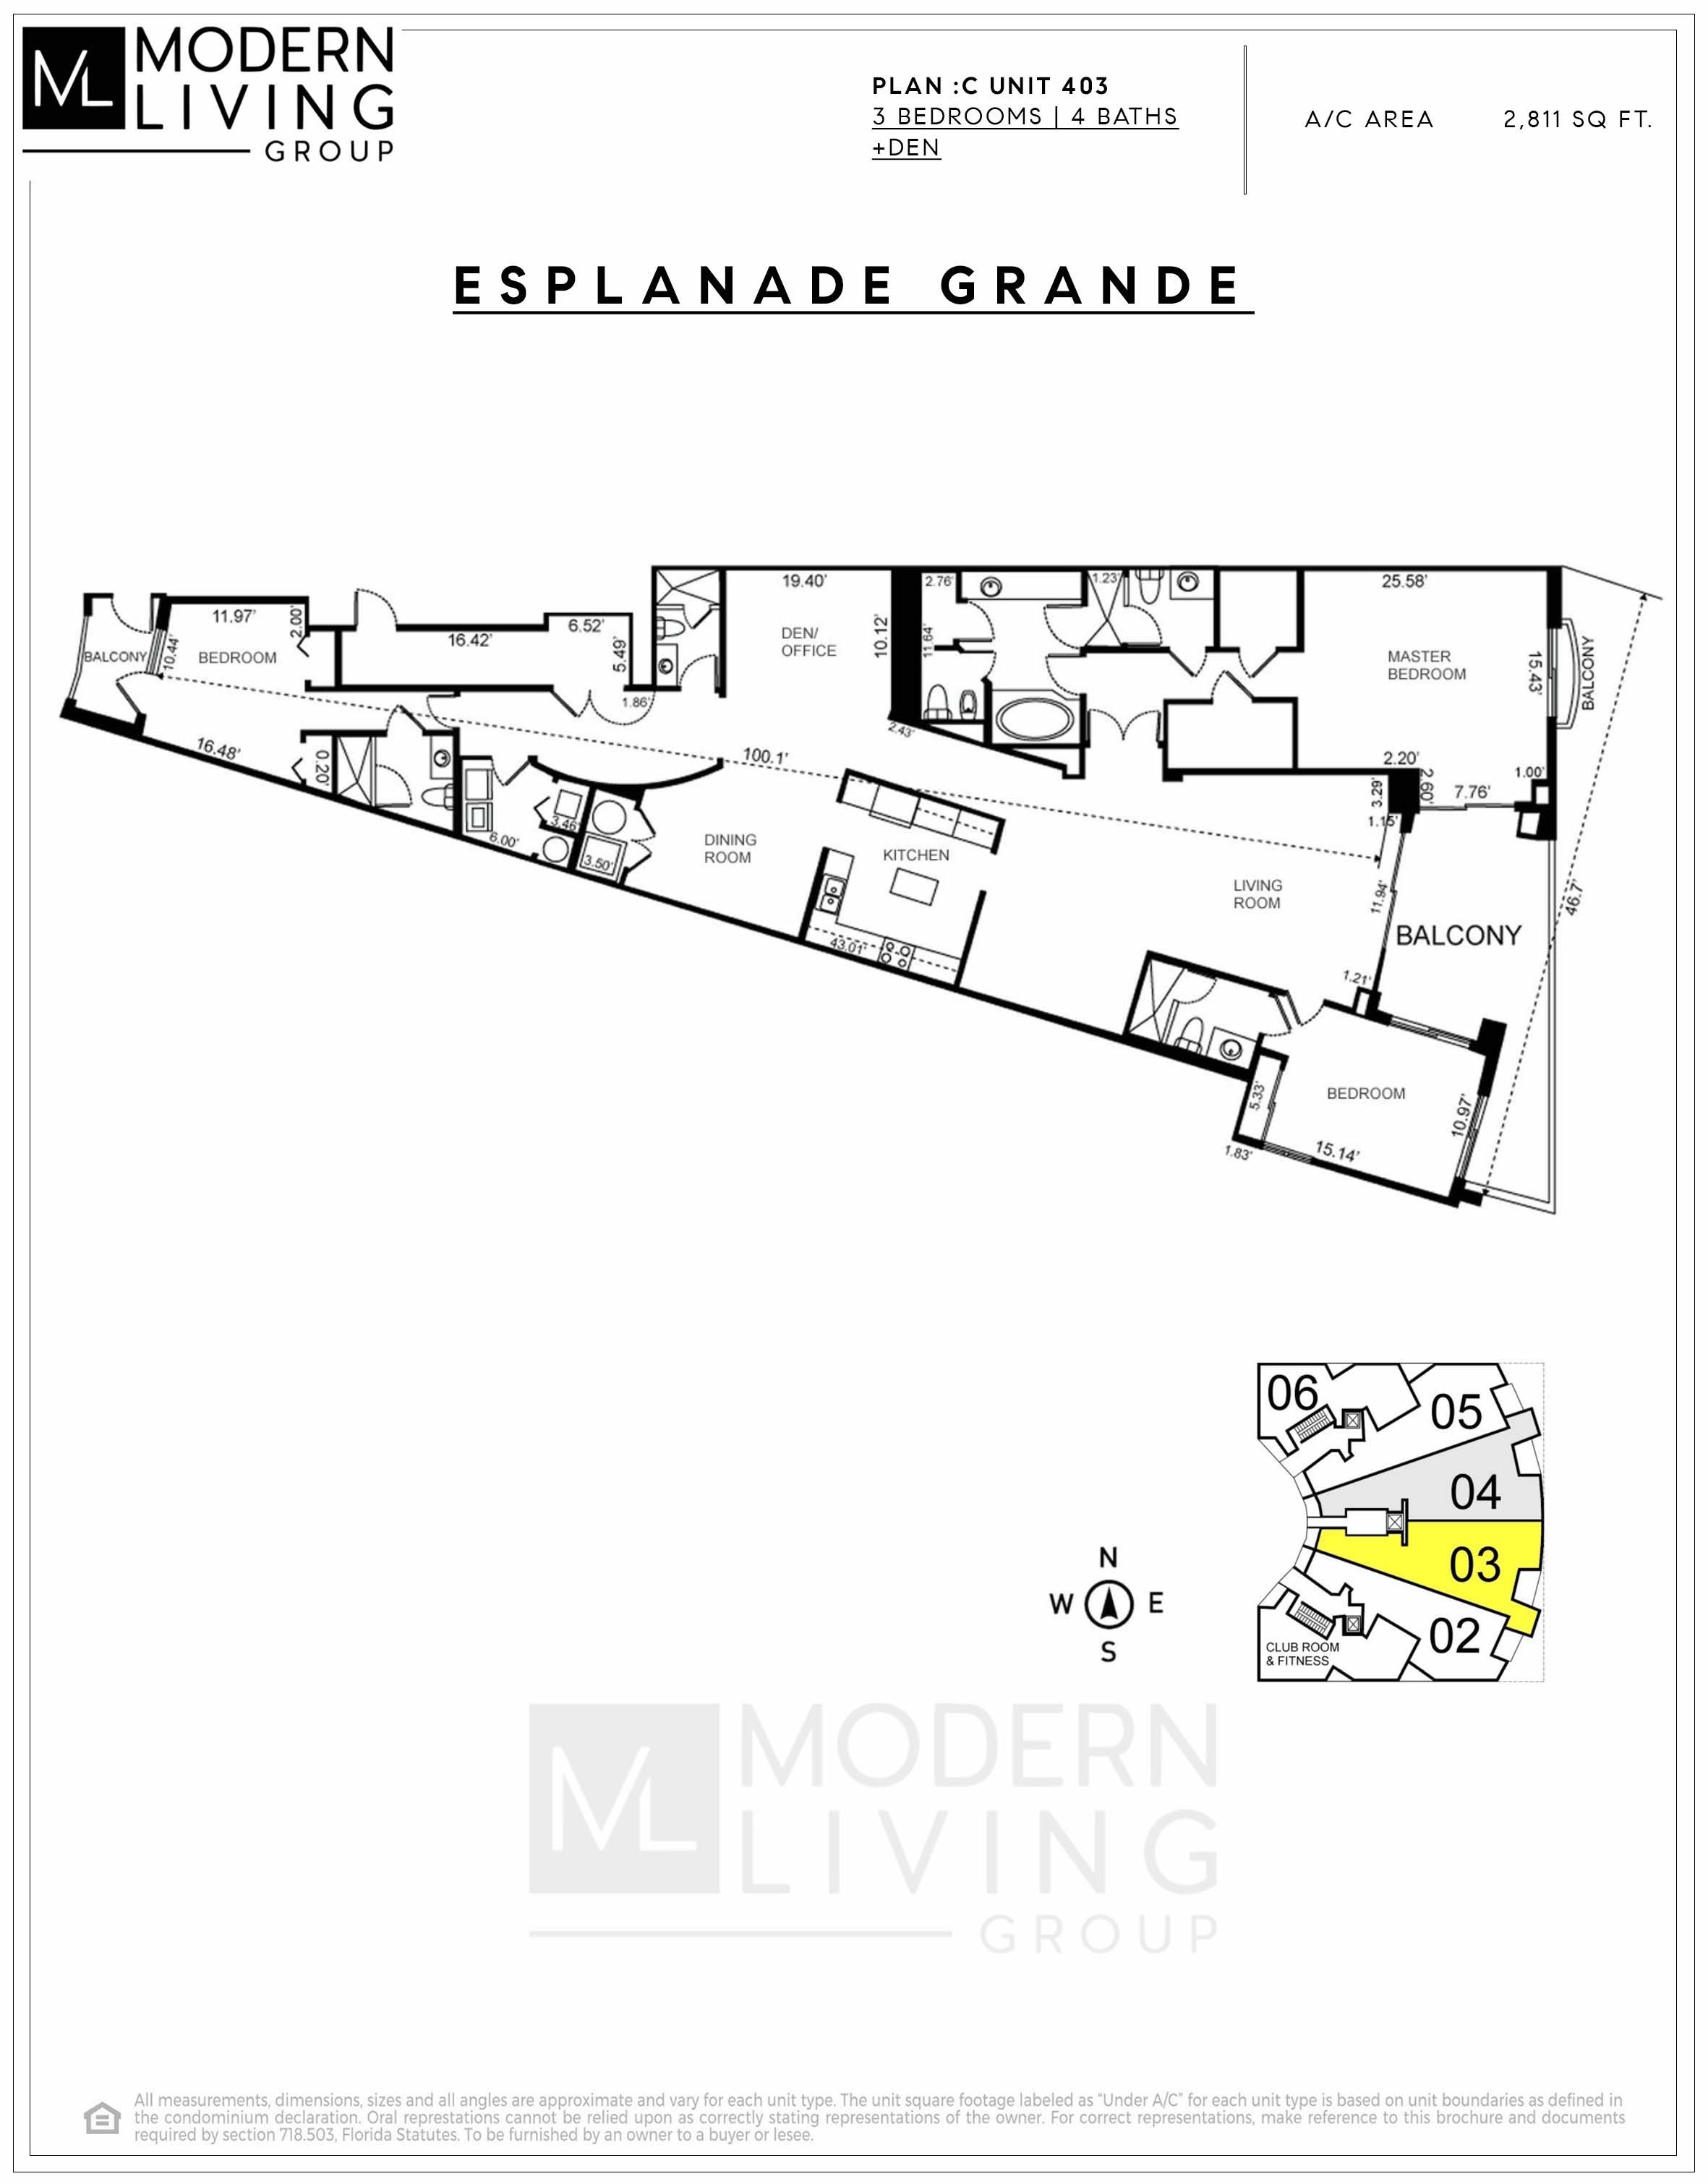 Floor Plan for Esplanade Grande Floorplans, Type C Unit 403